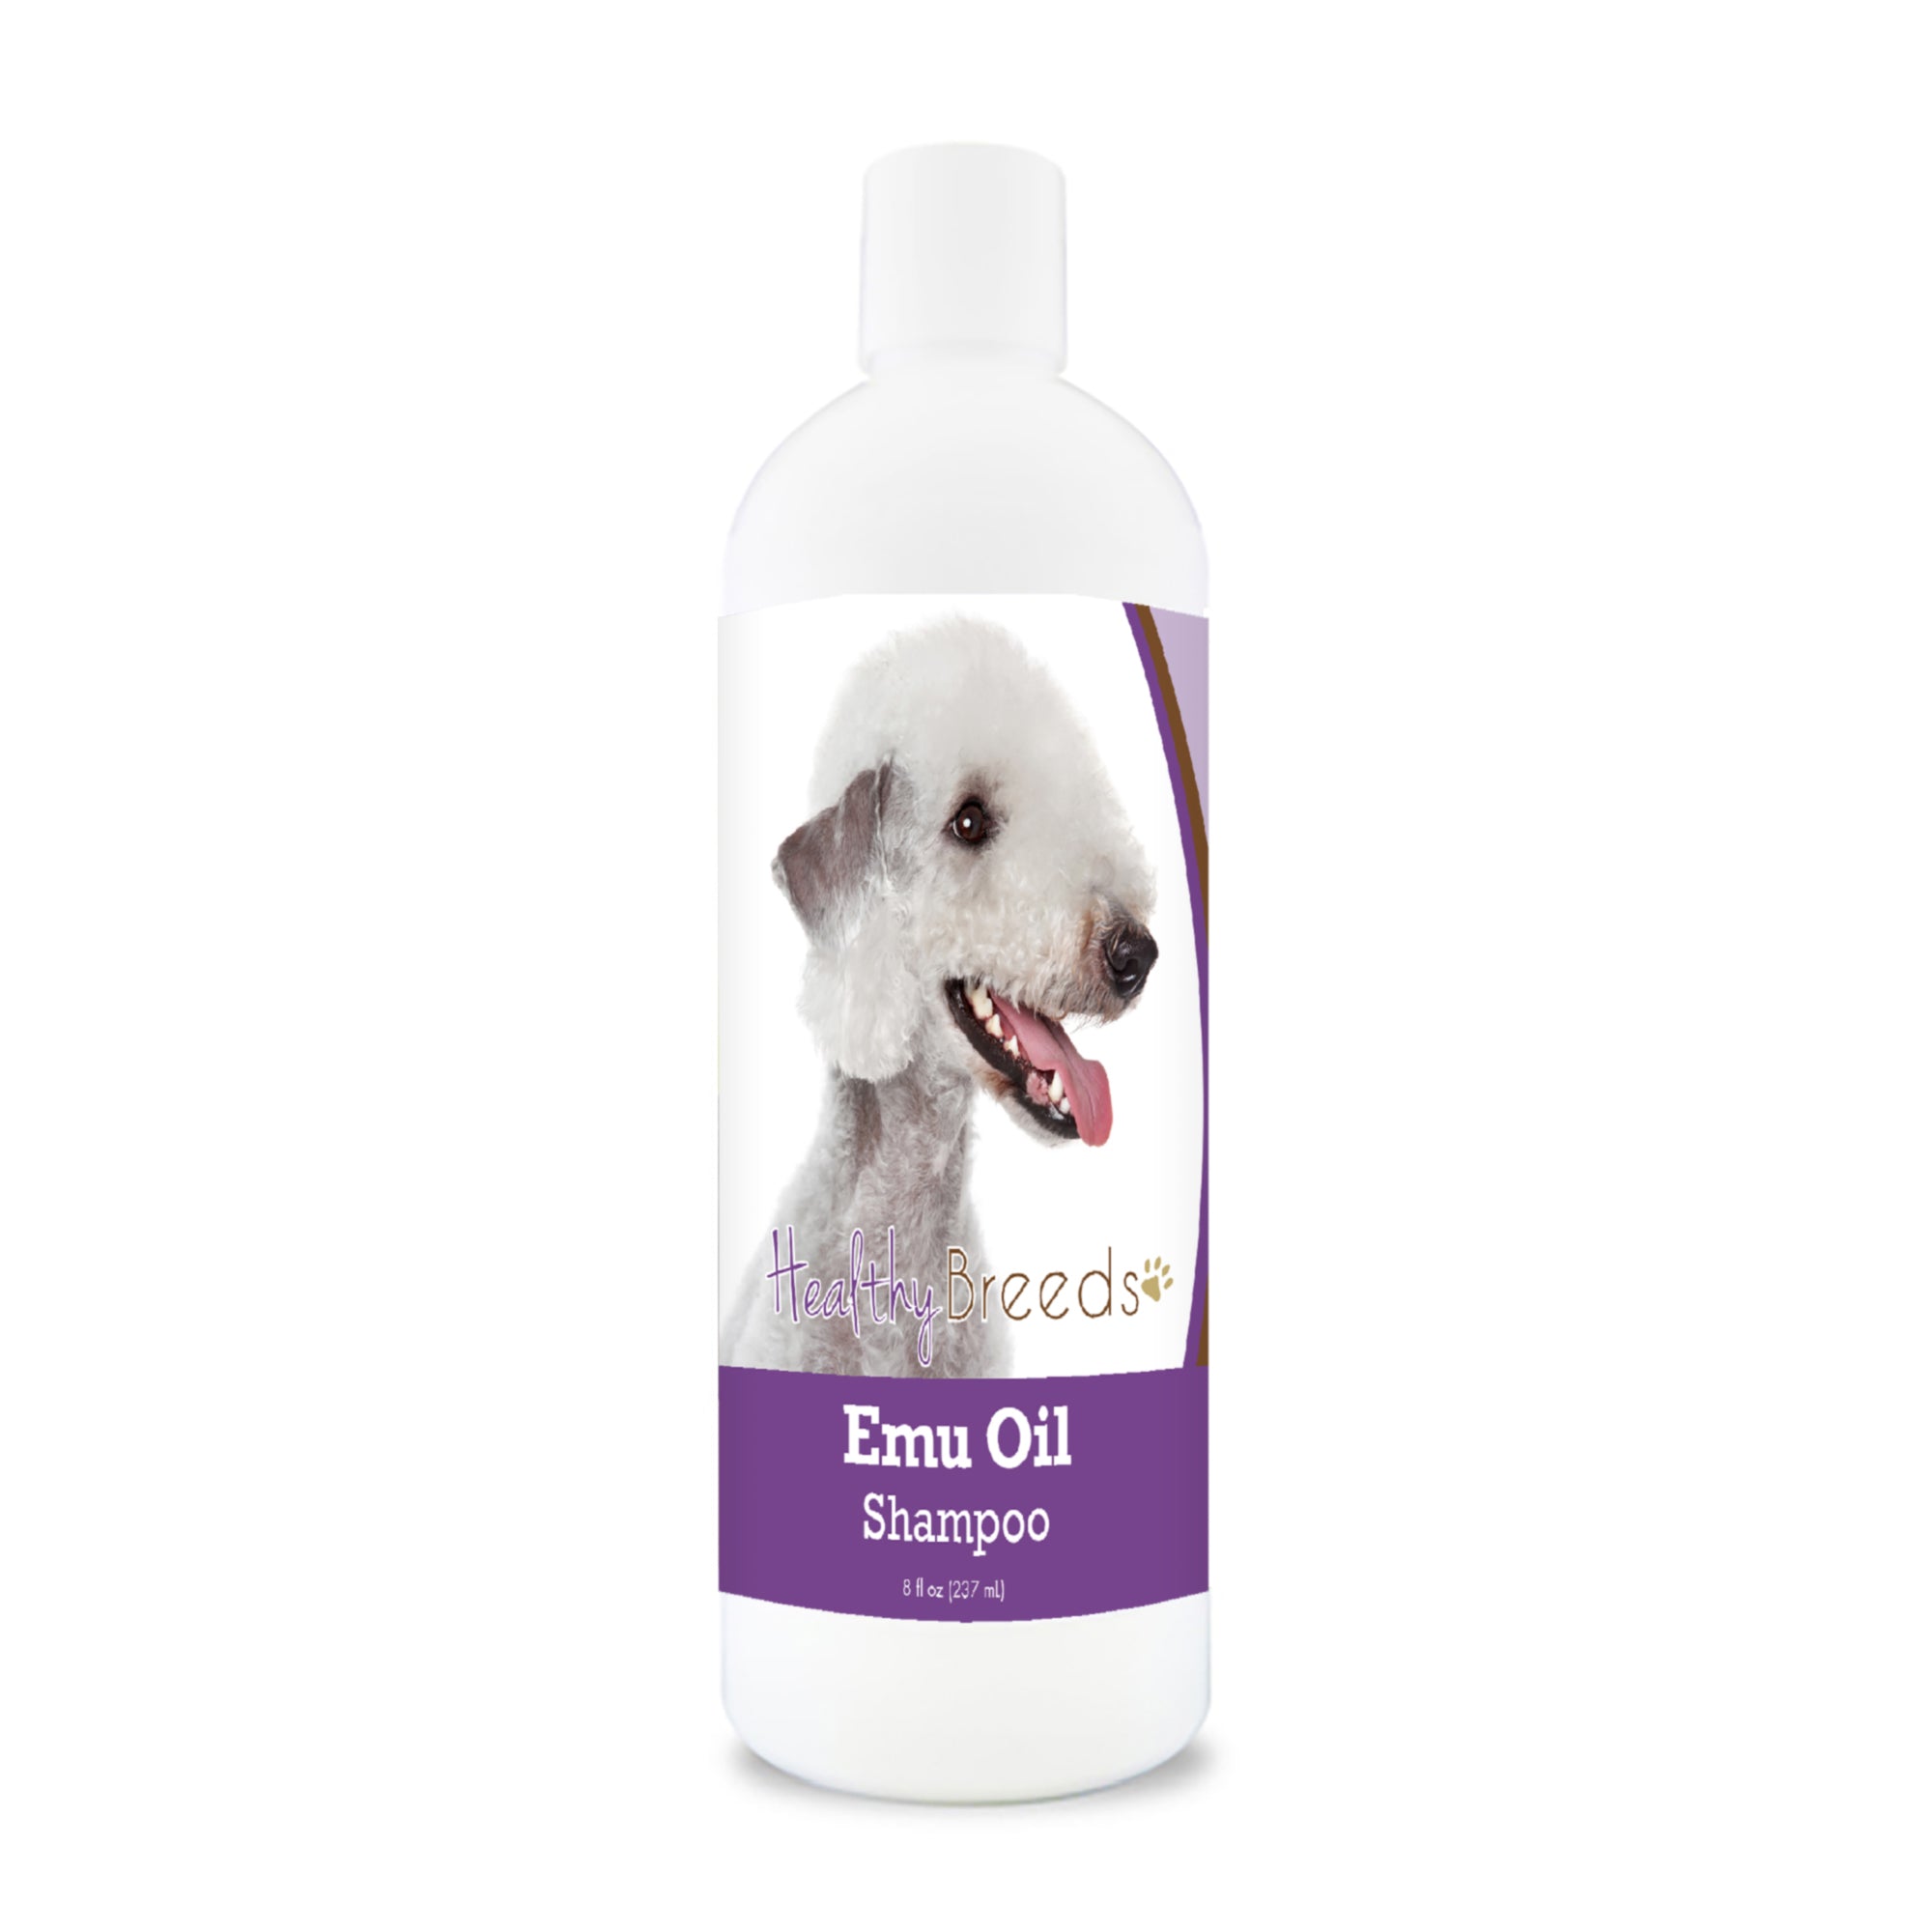 Bedlington Terrier Emu Oil Shampoo 8 oz